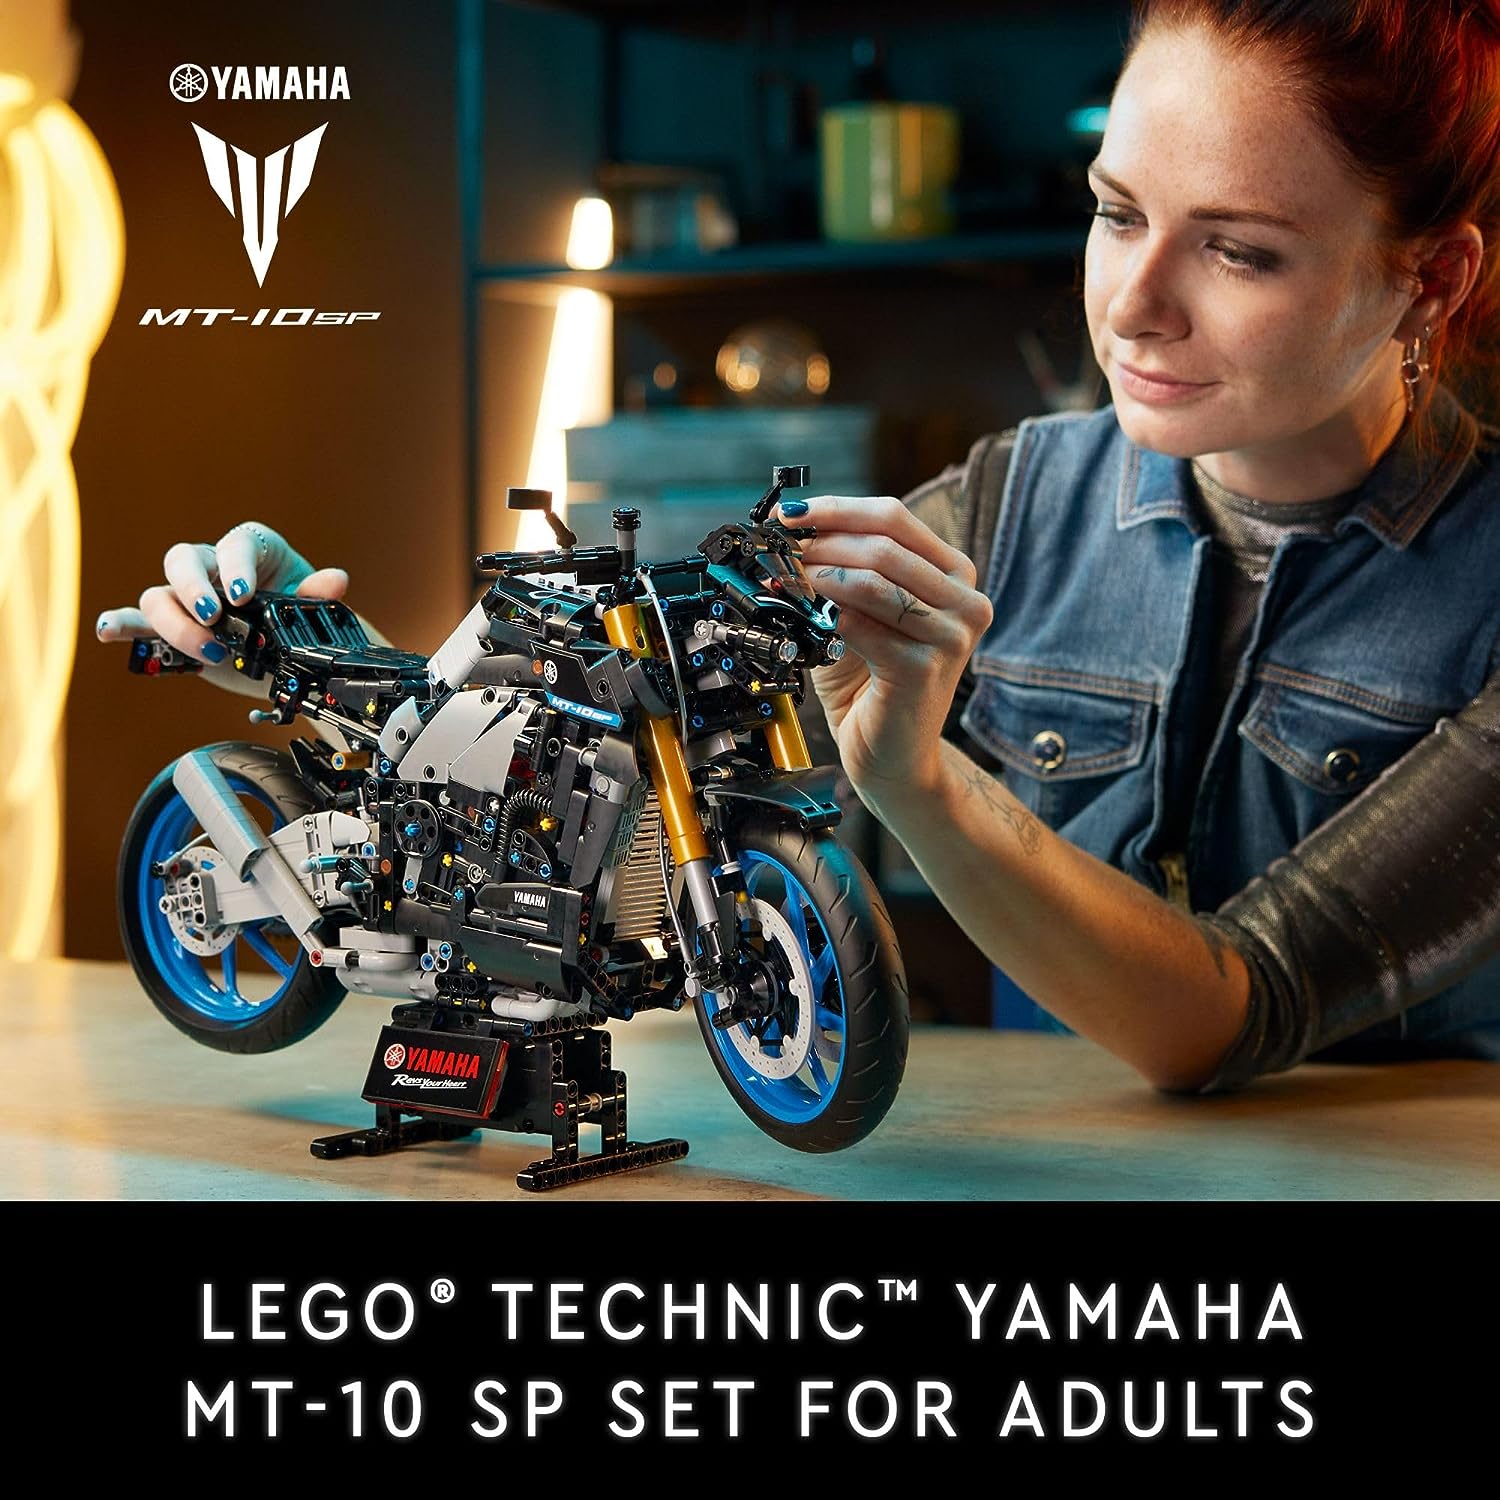 LEGO Technic Yamaha MT-10 SP 42159 Advanced Building Set for Adults - $170